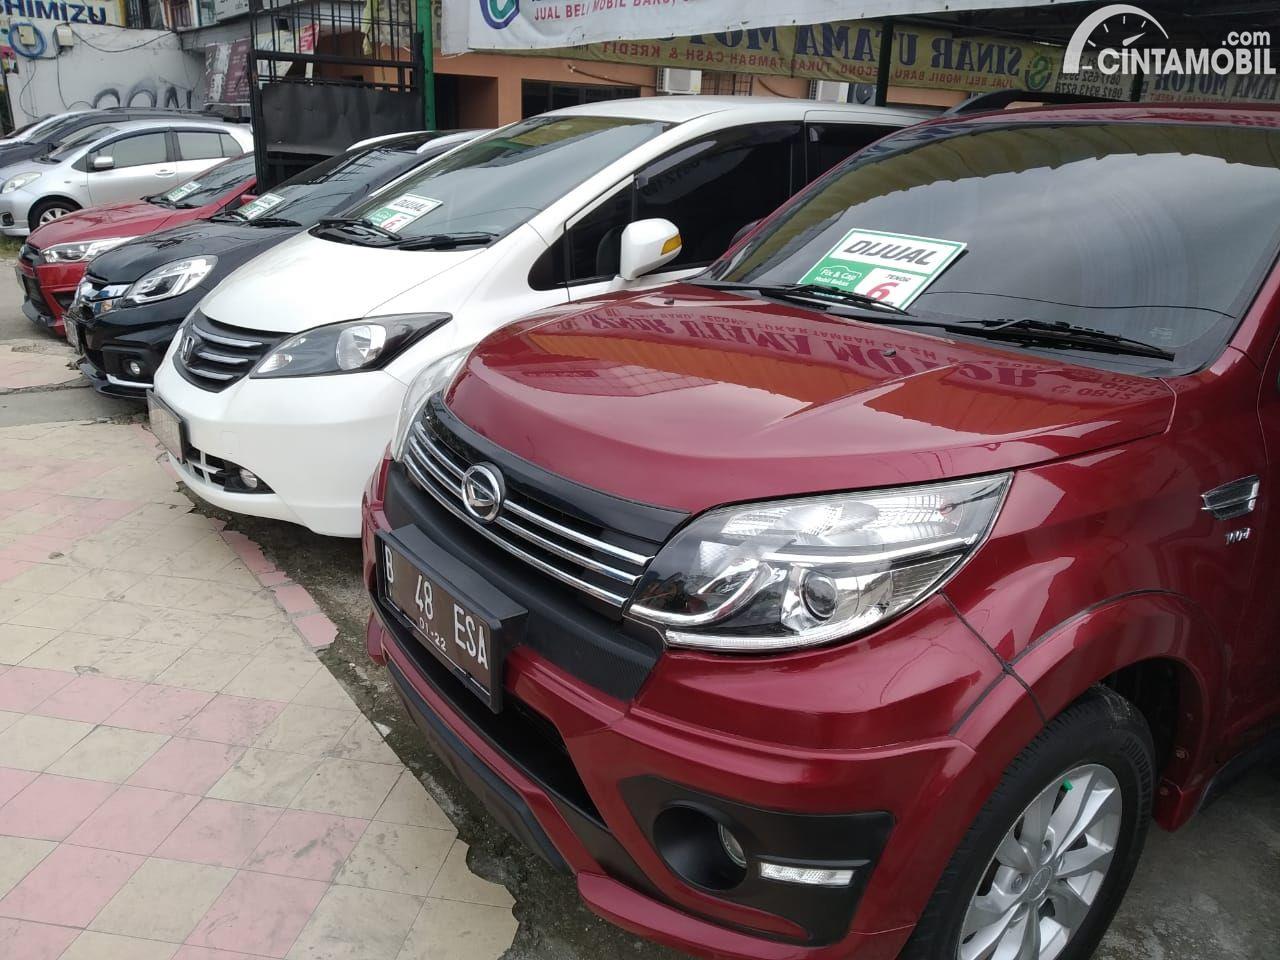 Cek Harga Bursa Mobil Bekas Jogja di Cintamobil com